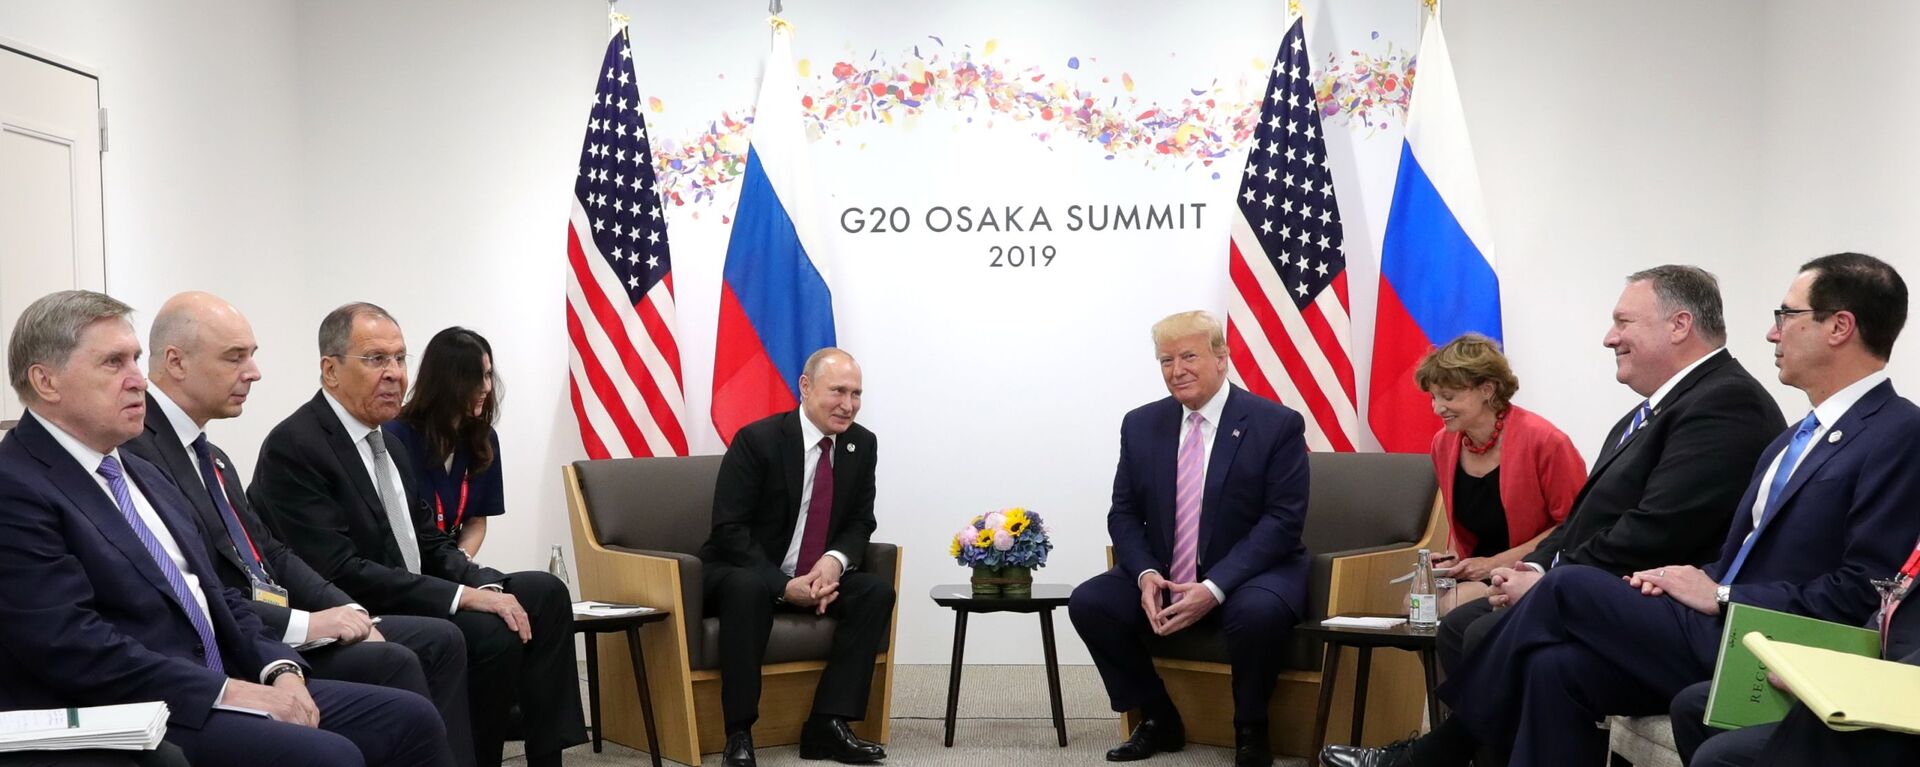 Delegations, led by Russia's President Vladimir Putin and U.S. President Donald Trump, hold talks on the sidelines of the G20 summit in Osaka, Japan June 28, 2019 - Sputnik International, 1920, 28.09.2021